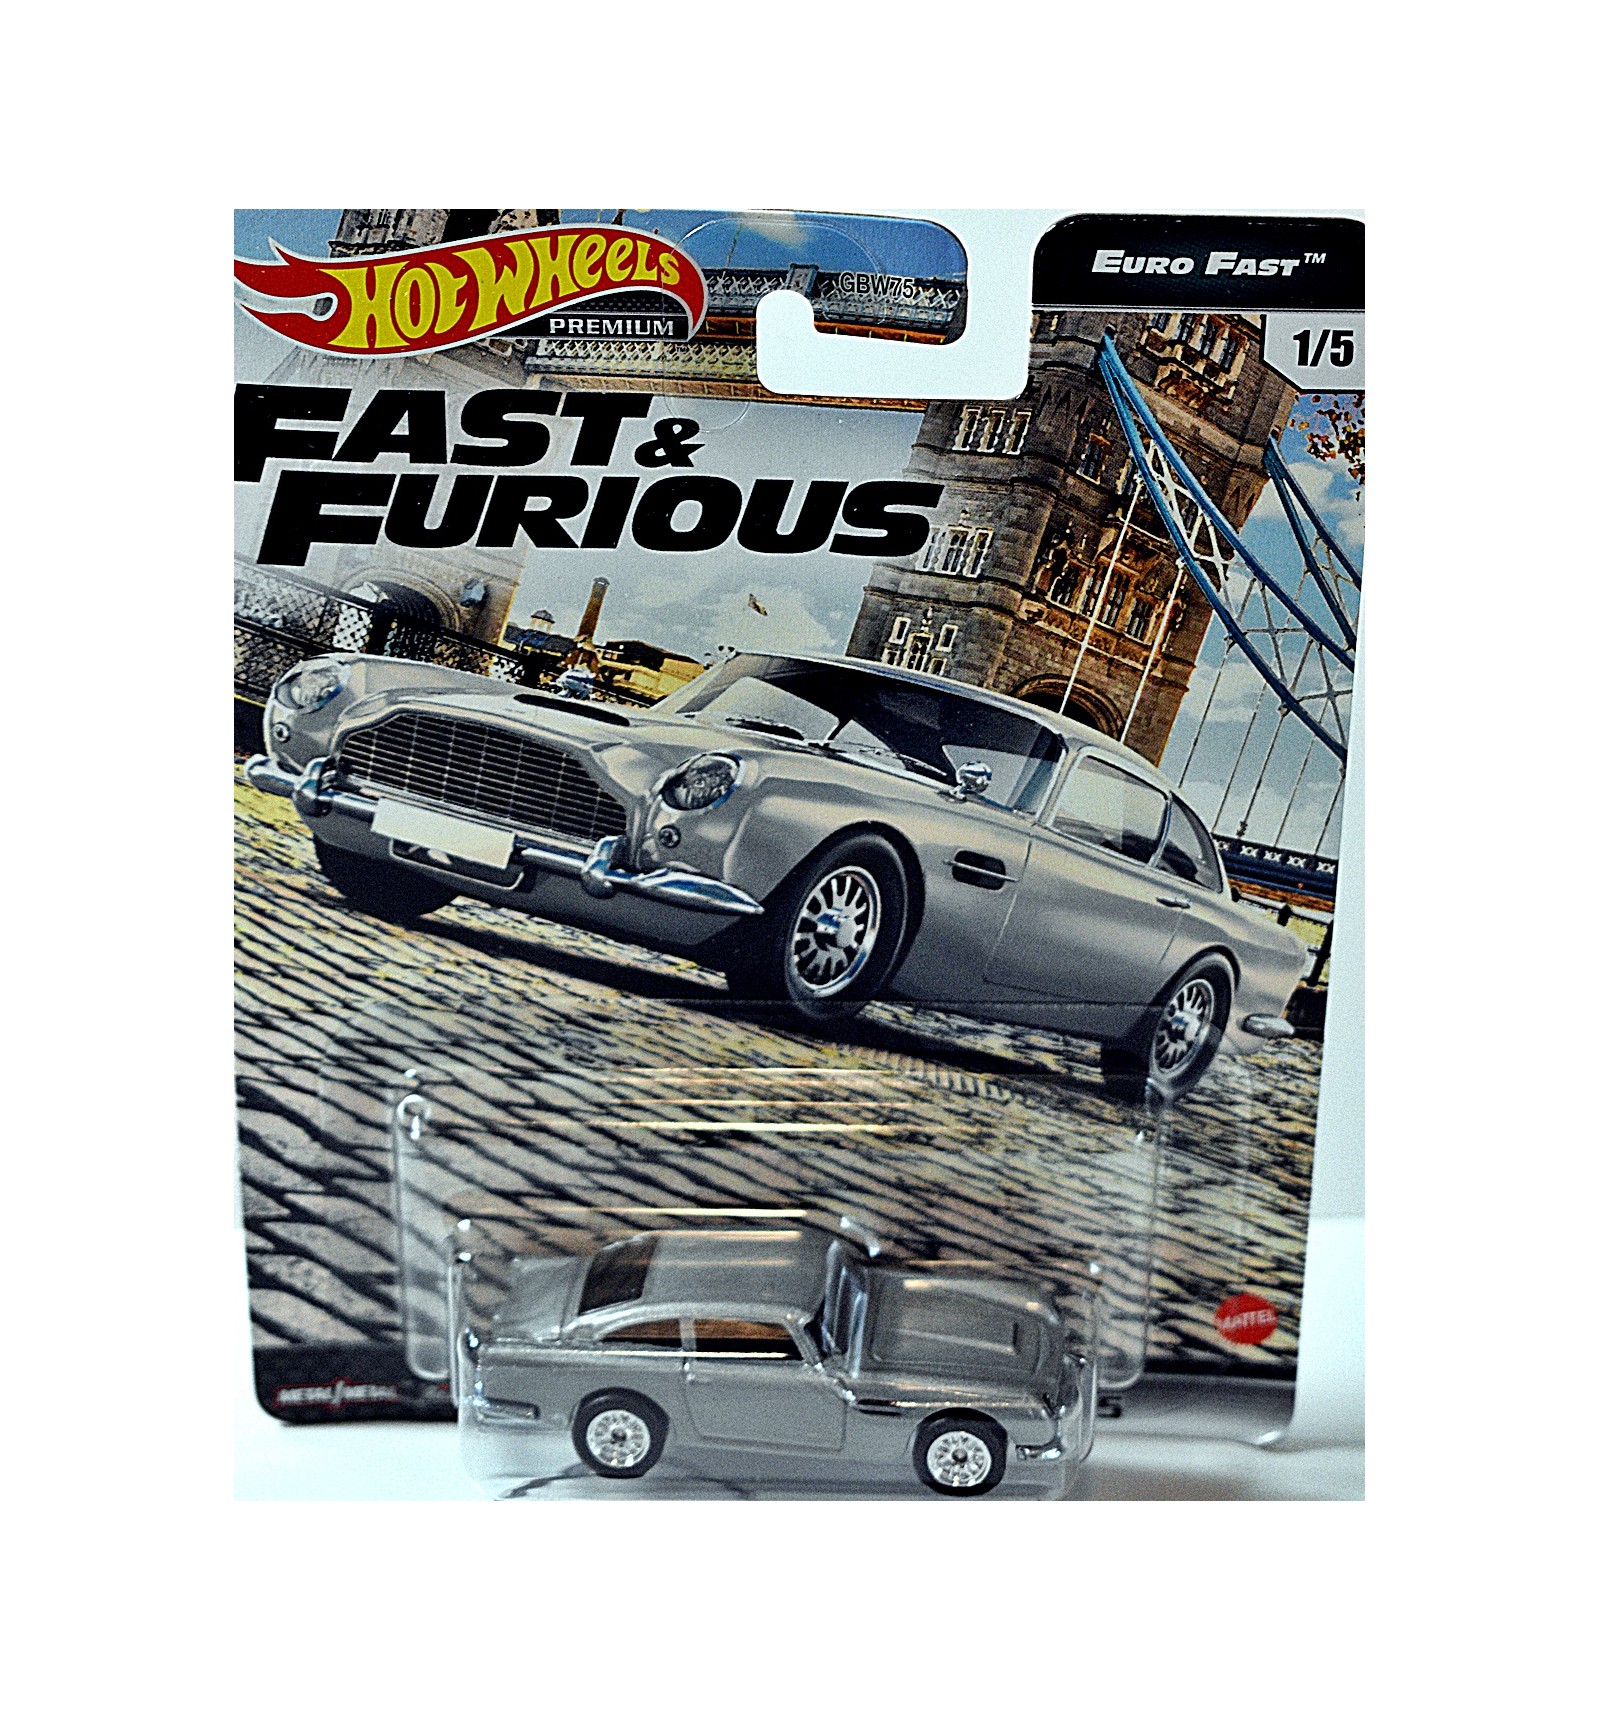 Hot Wheels Fast & Furious Euro Fast Premium Set 1:64 Aston Martin DB5 